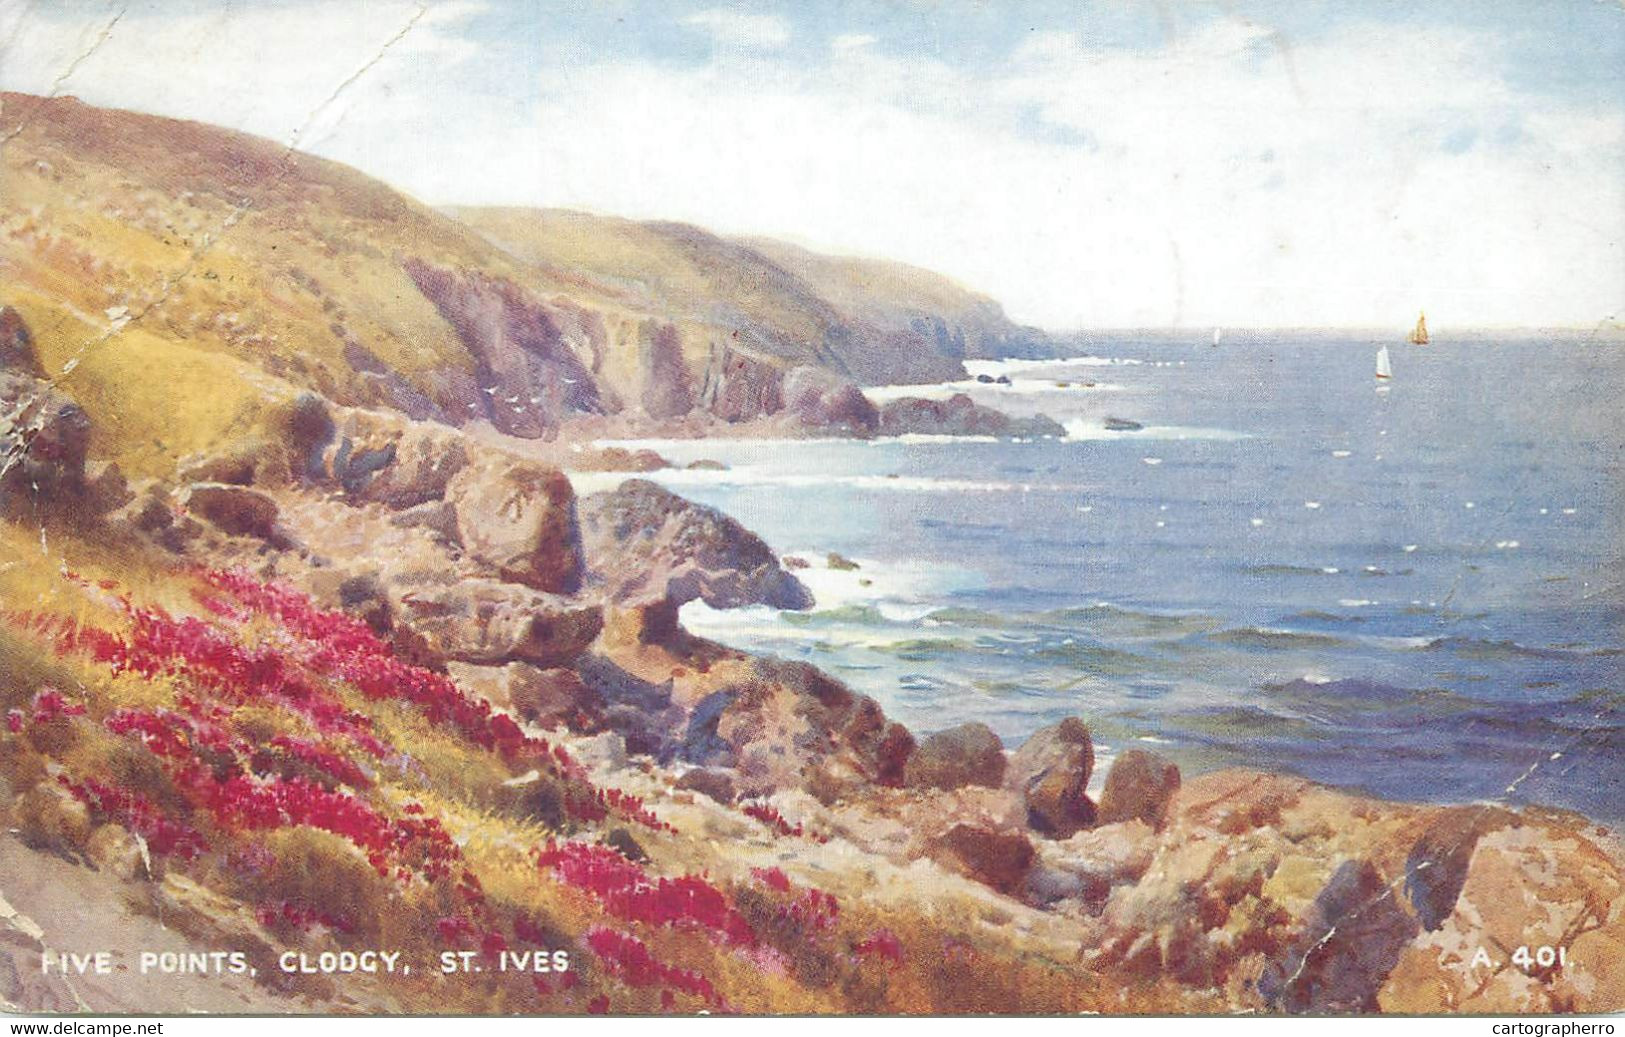 England St Ives Clodgy Five Points Coastal Scenery - St.Ives